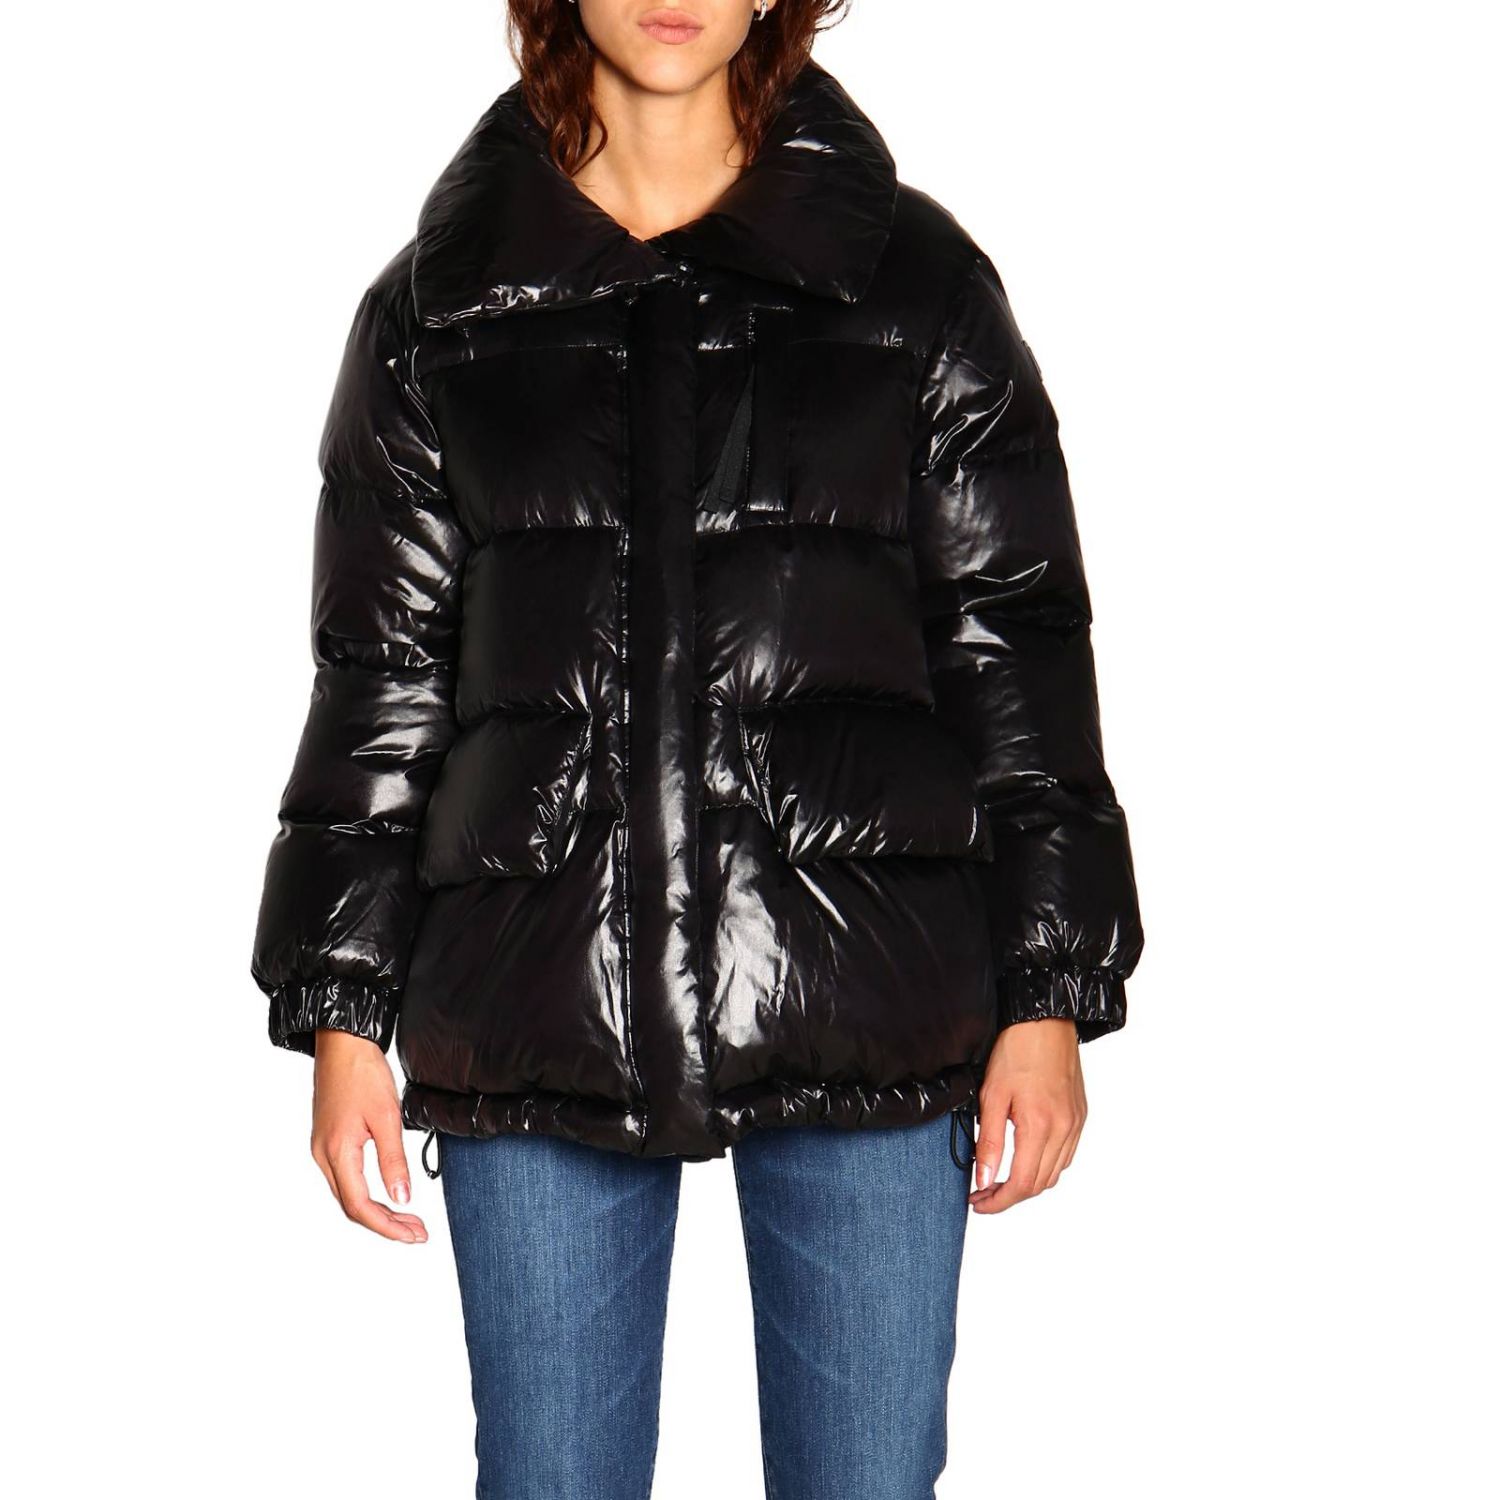 Woolrich Outlet: jacket for women - Black | Woolrich jacket WWCPS2786 ...